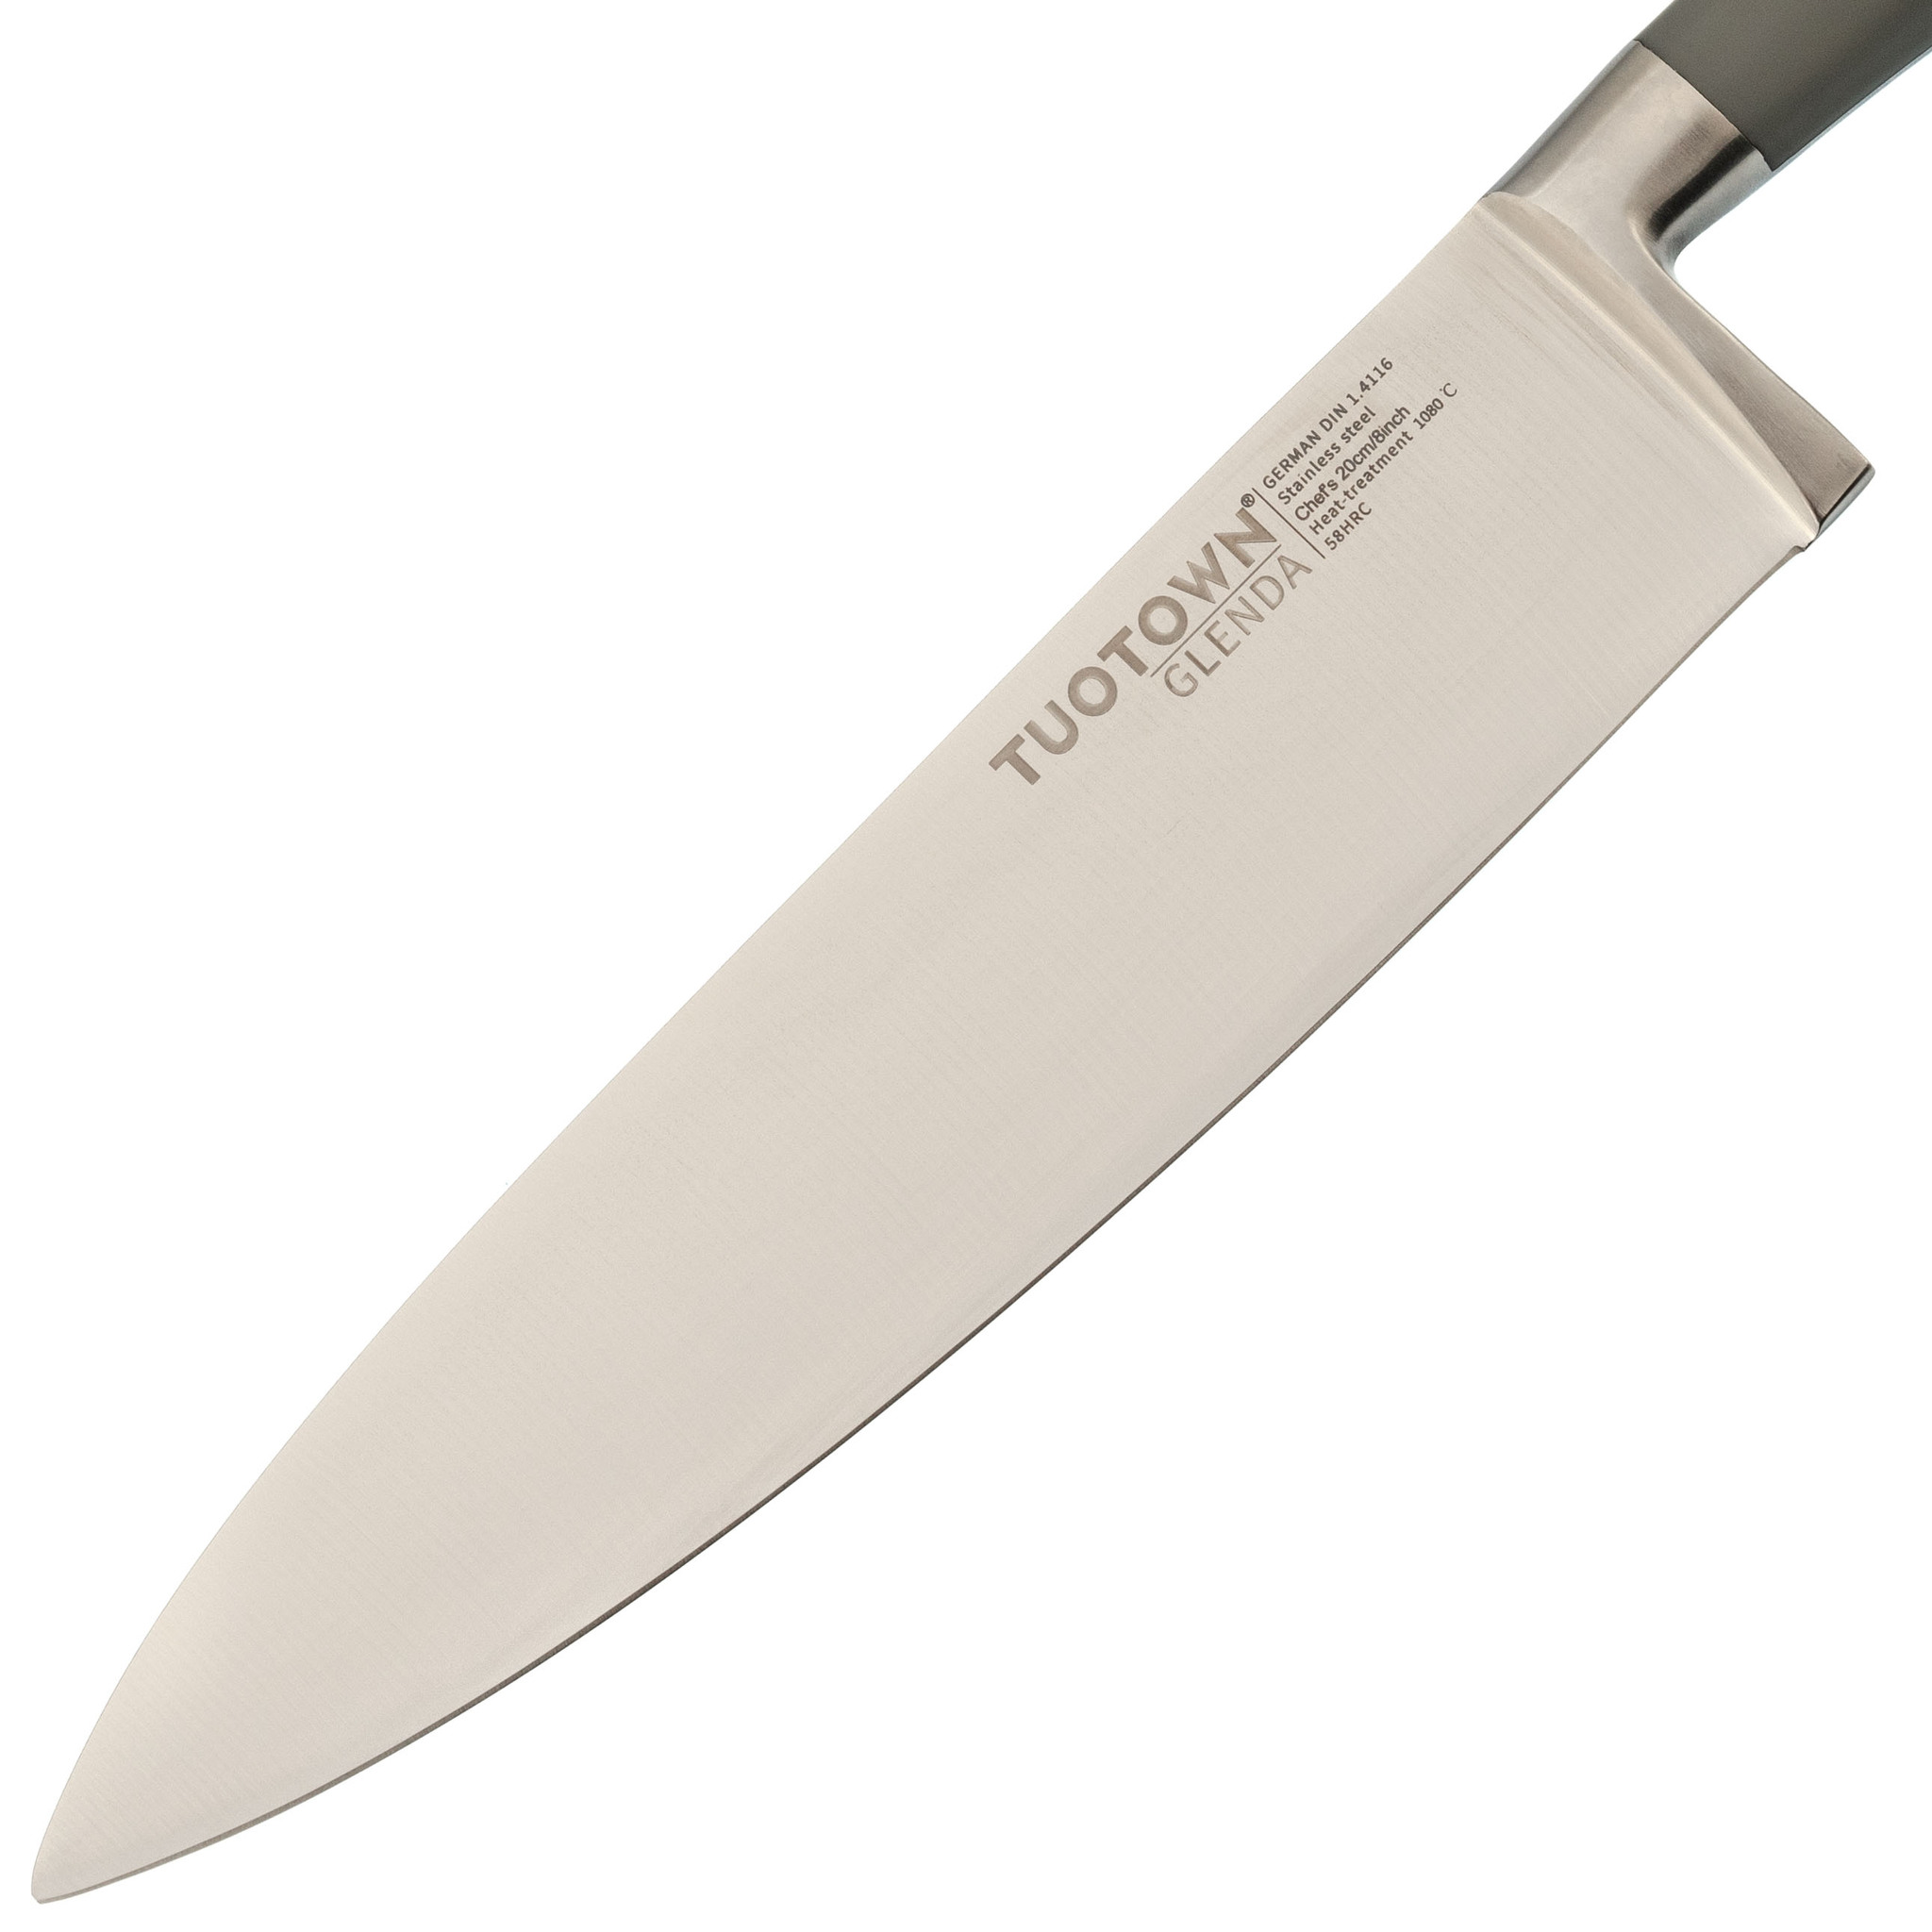 Кухонный нож Шеф Tuotown, сталь 1.4116, пластик - фото 2